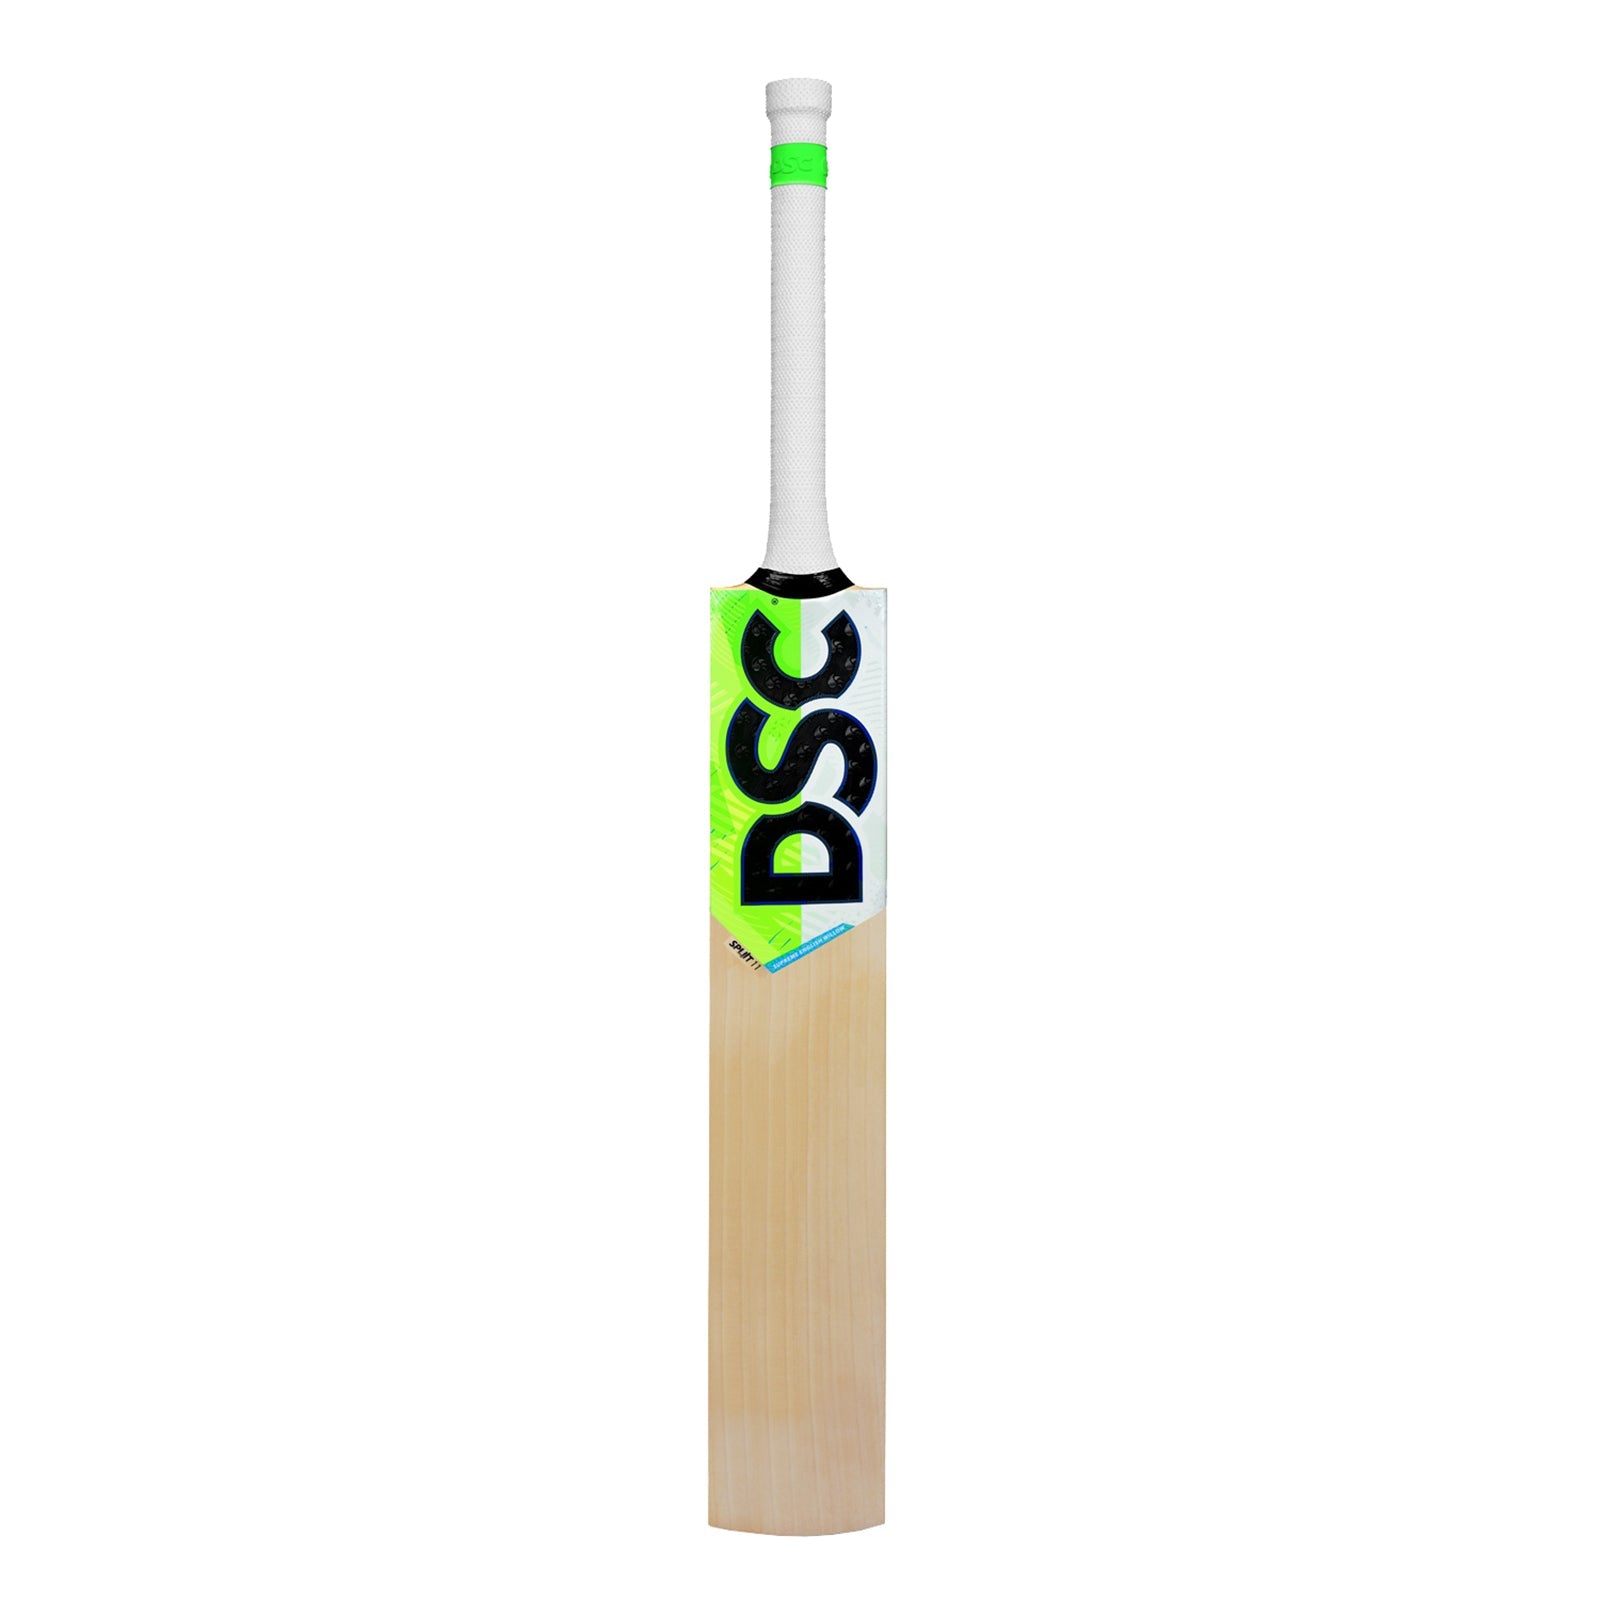 DSC Spliit 11 Cricket Bat - Senior